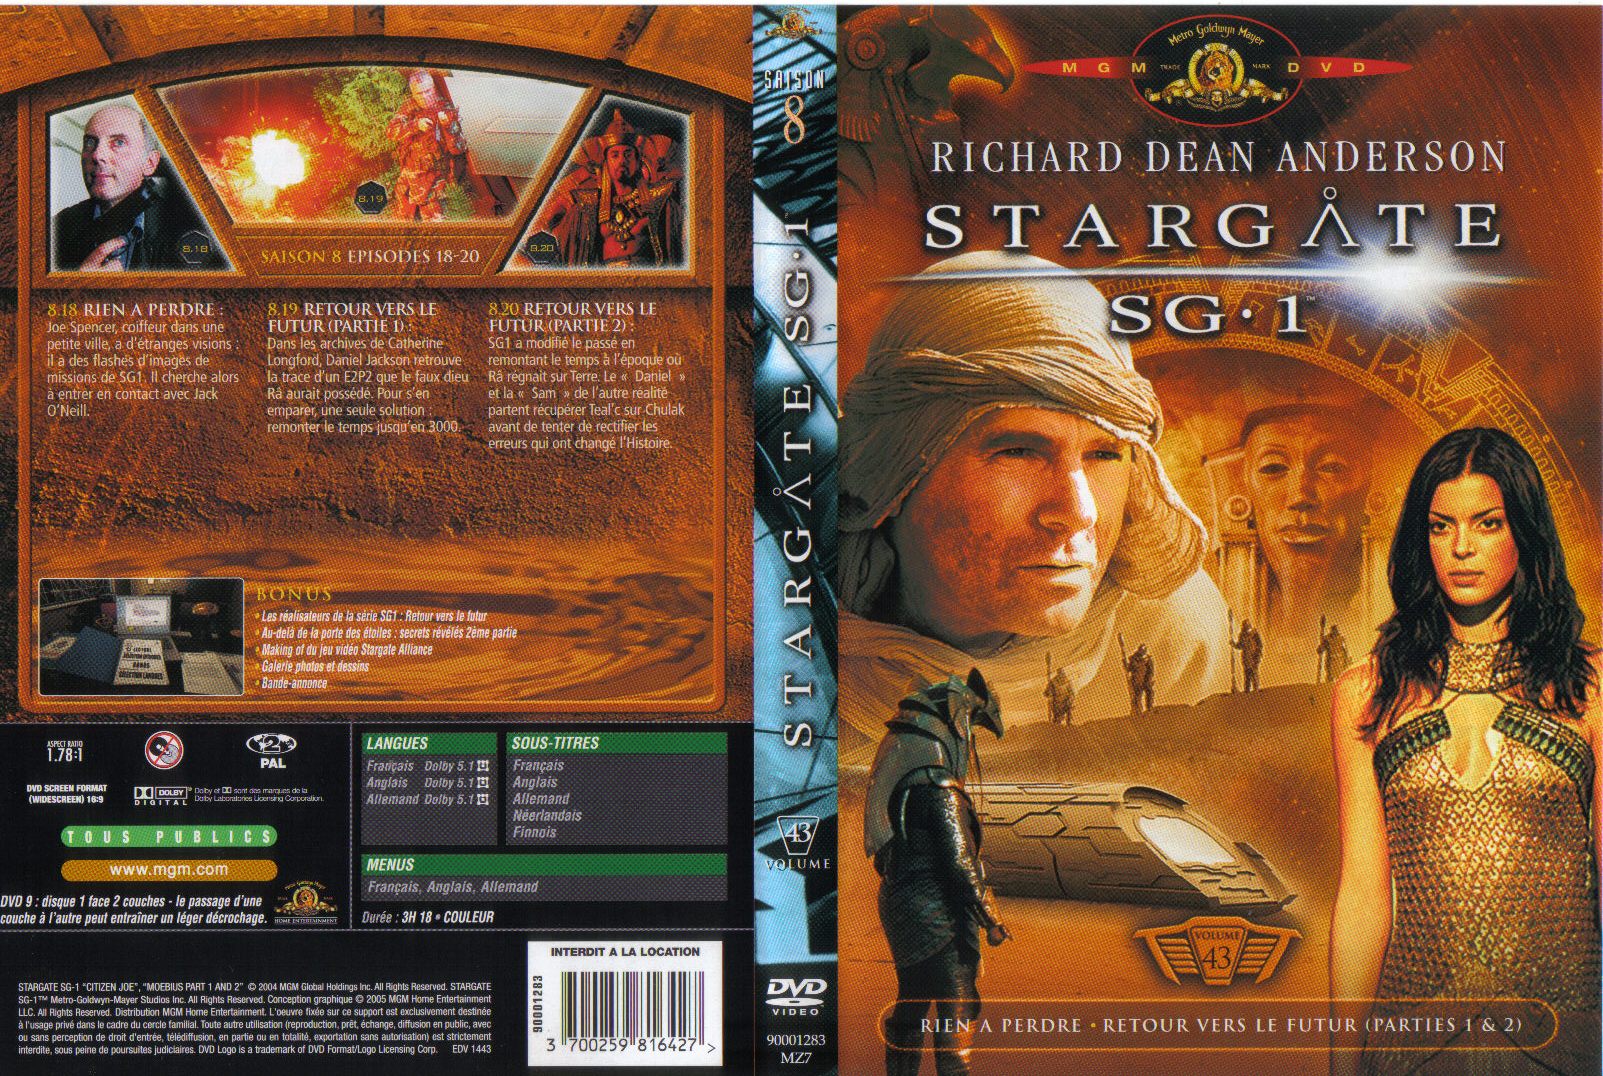 Jaquette DVD Stargate SG1 vol 43